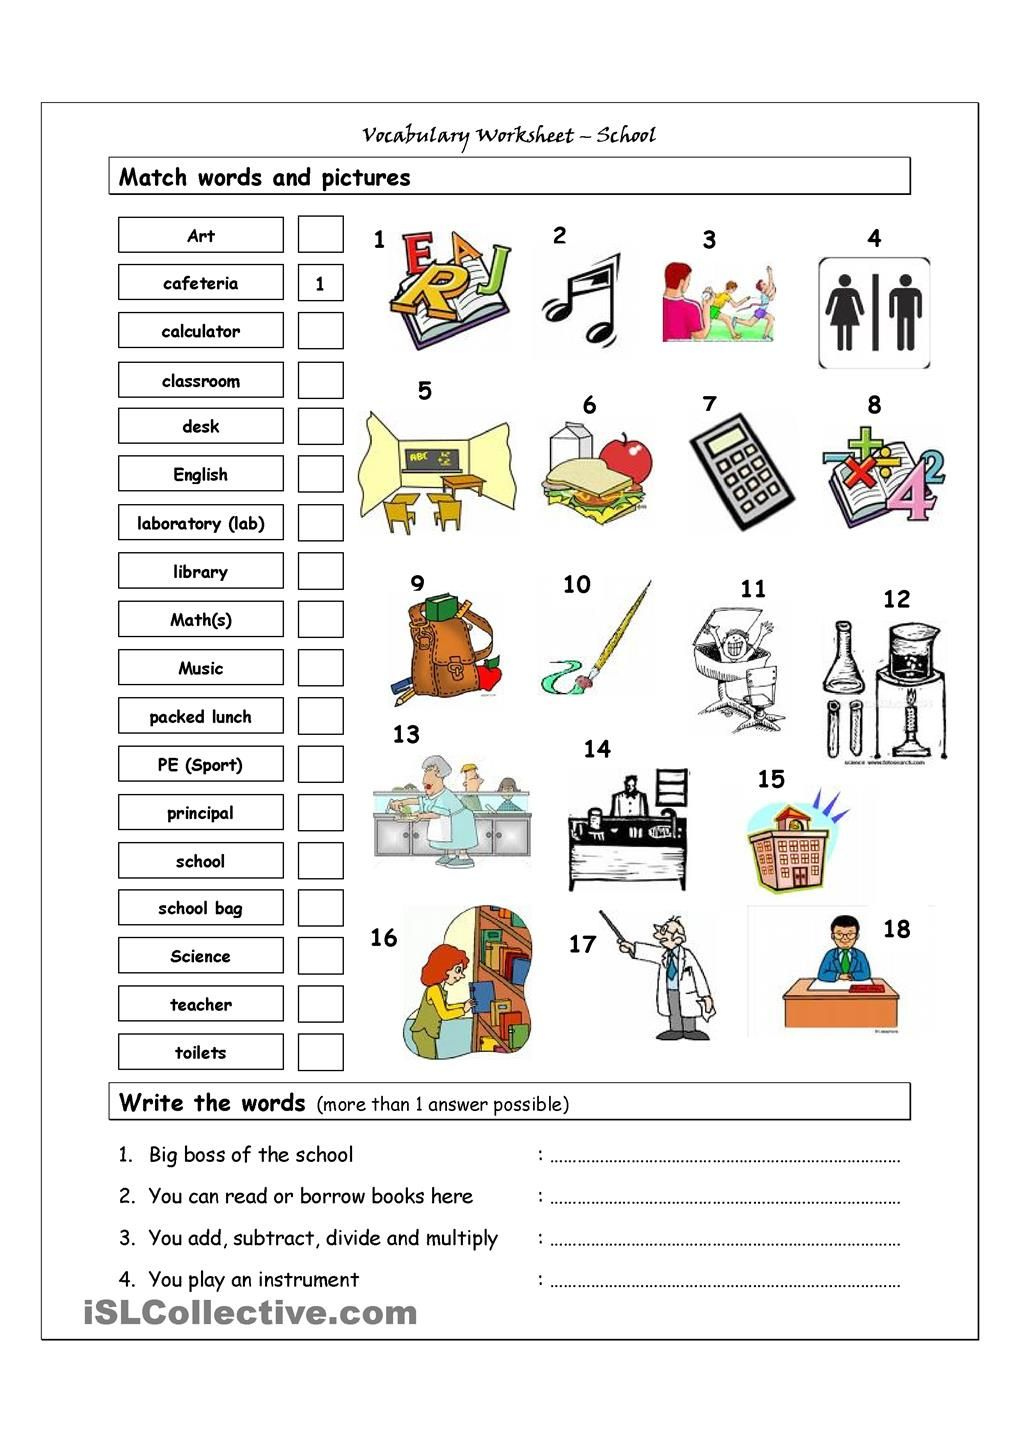 Vocabulary Matching Worksheet SCHOOL School Worksheets Vocabulary 